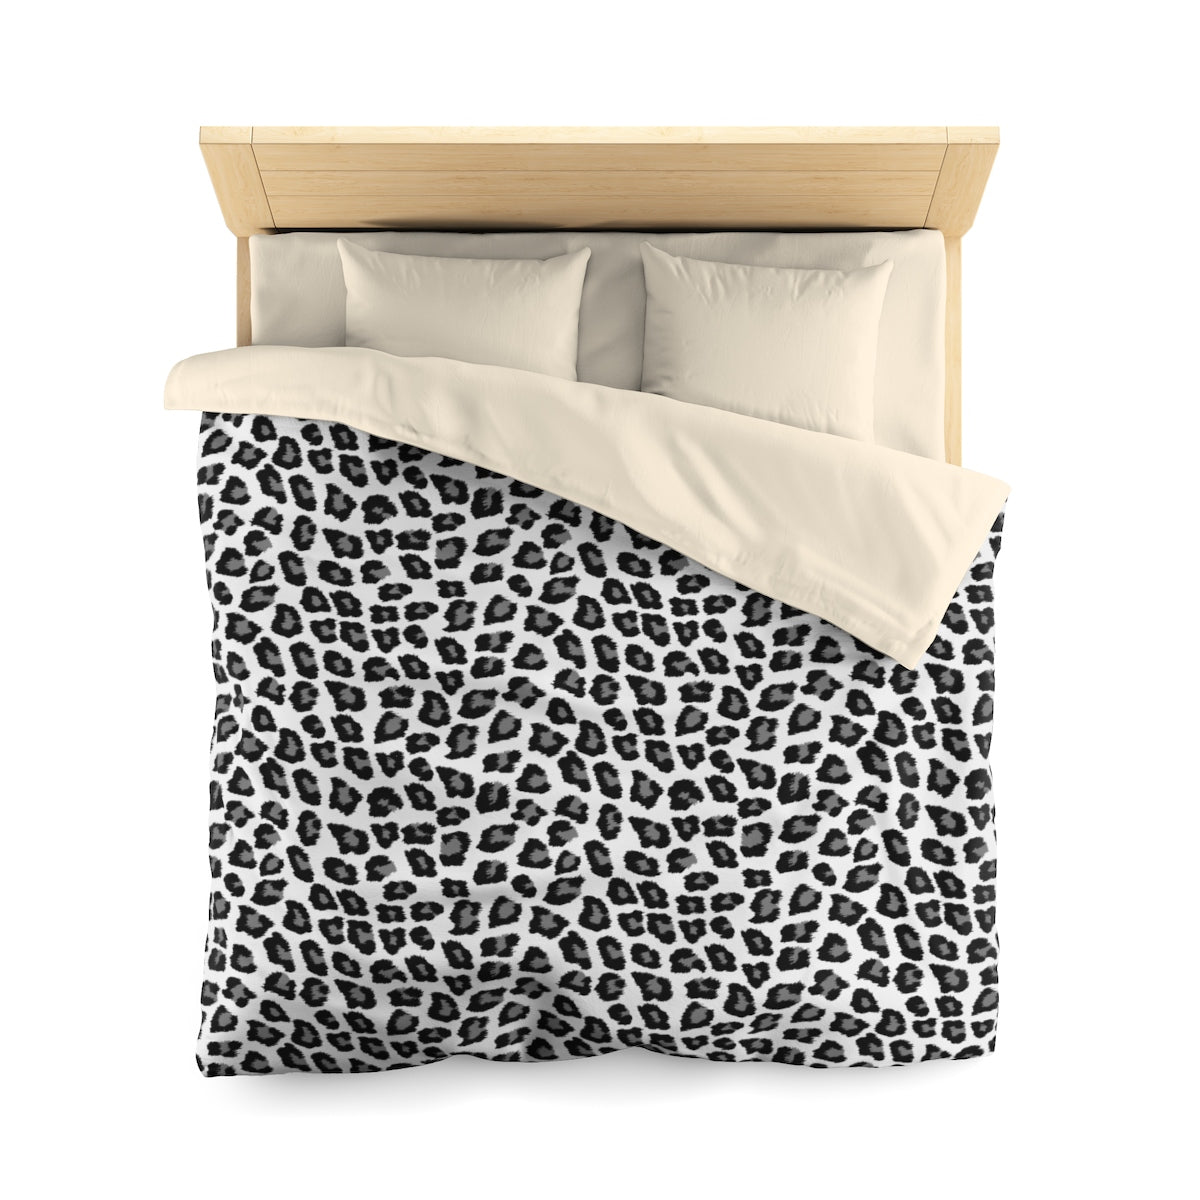 Snow Leopard Duvet Cover, Animal Print black White Microfiber Full Queen Twin Unique Vibrant Bed Cover Home Bedding Starcove Fashion